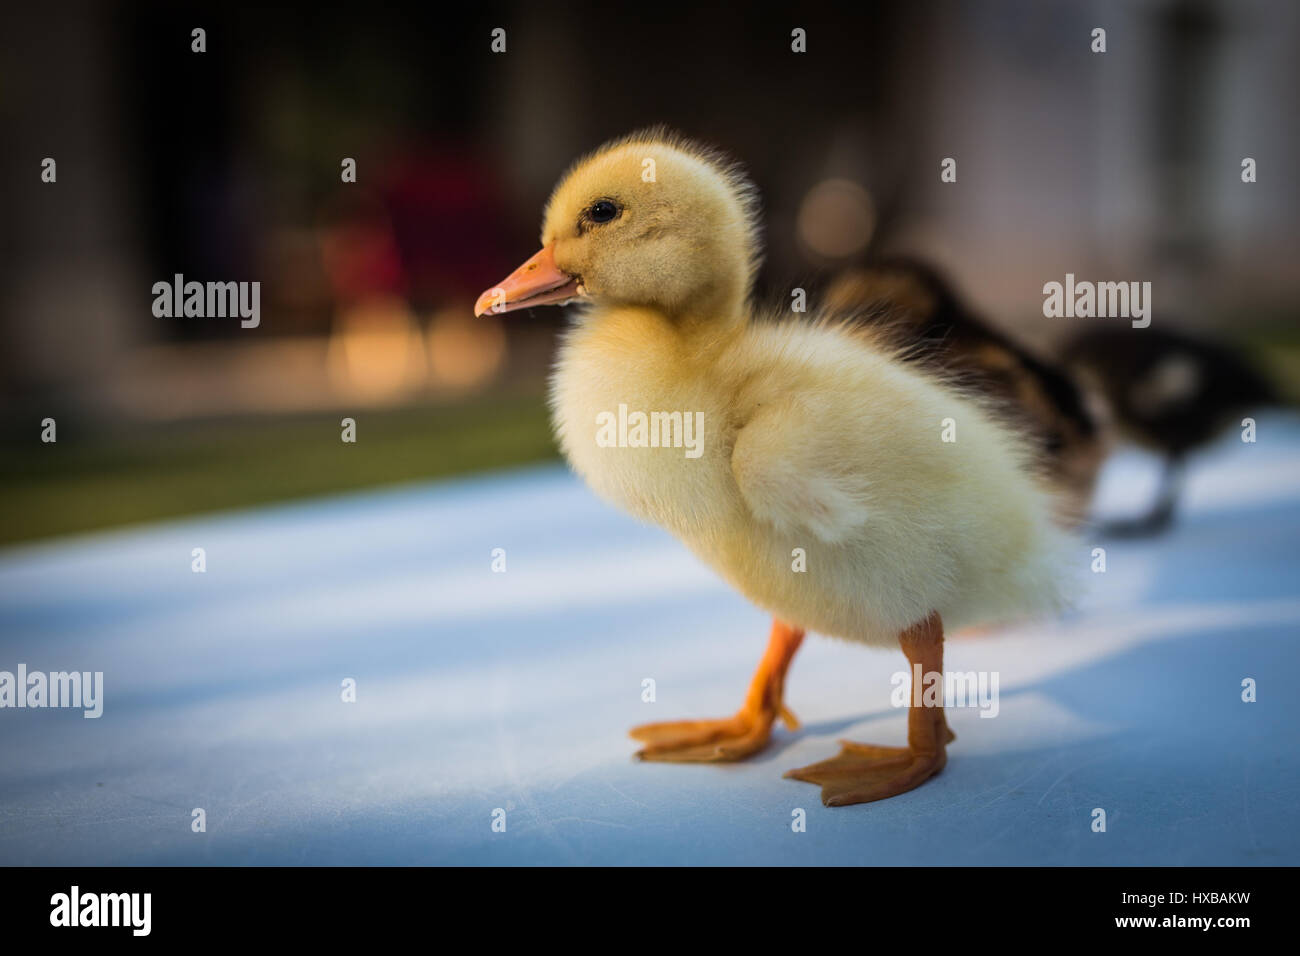 Shutterstock Stock Photo Alamy